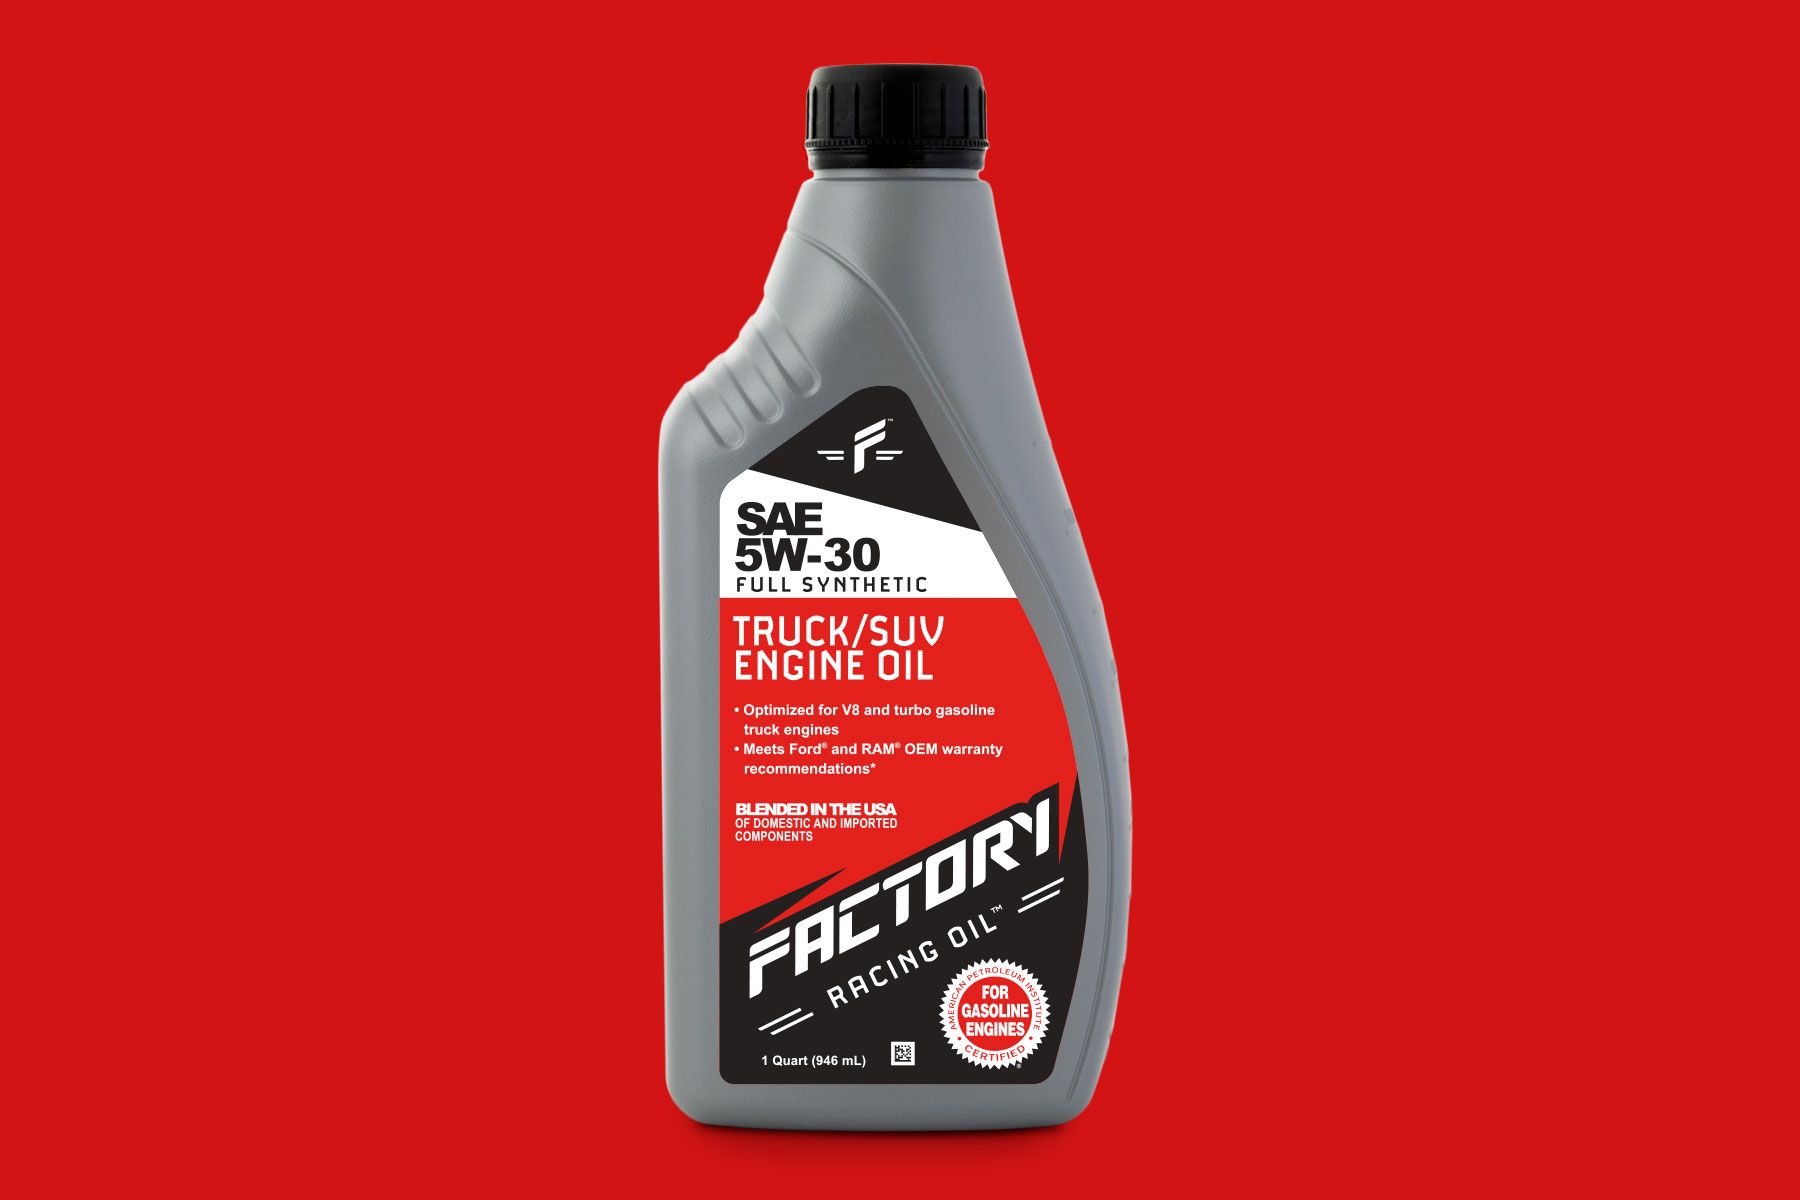 Factory Racing Oil 5W-30 quart bottle